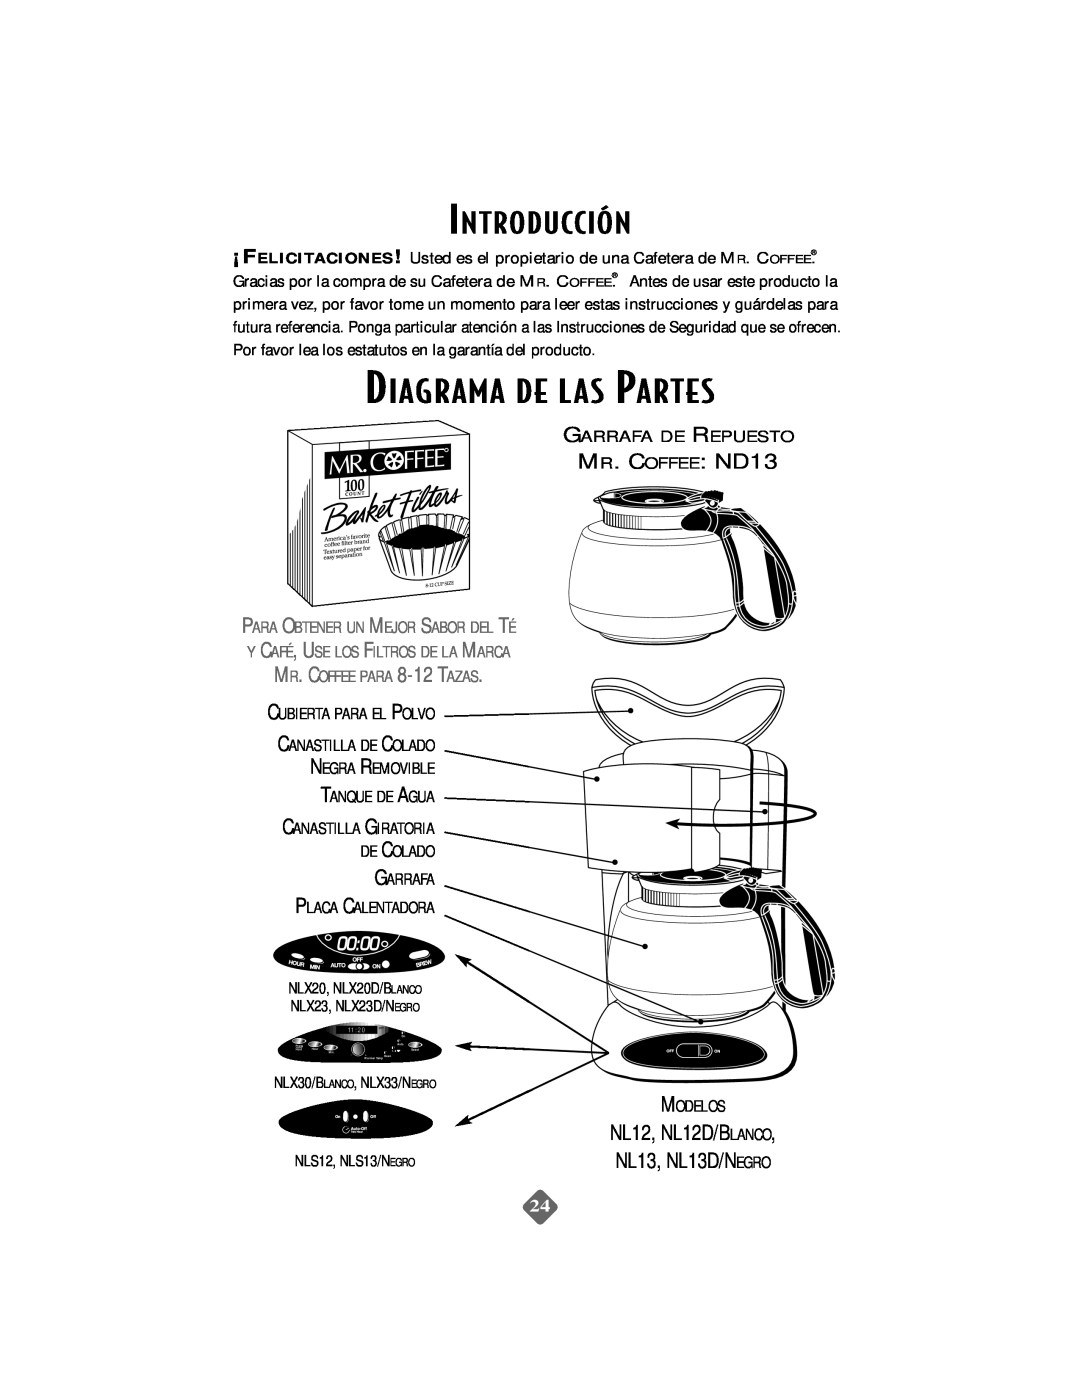 Mr. Coffee NLS12 Diagrama De L As Partes, NL12, NL12D/BLANCO NL13, NL13D/NEGRO, MR. COFFEE ND13, Introducción 